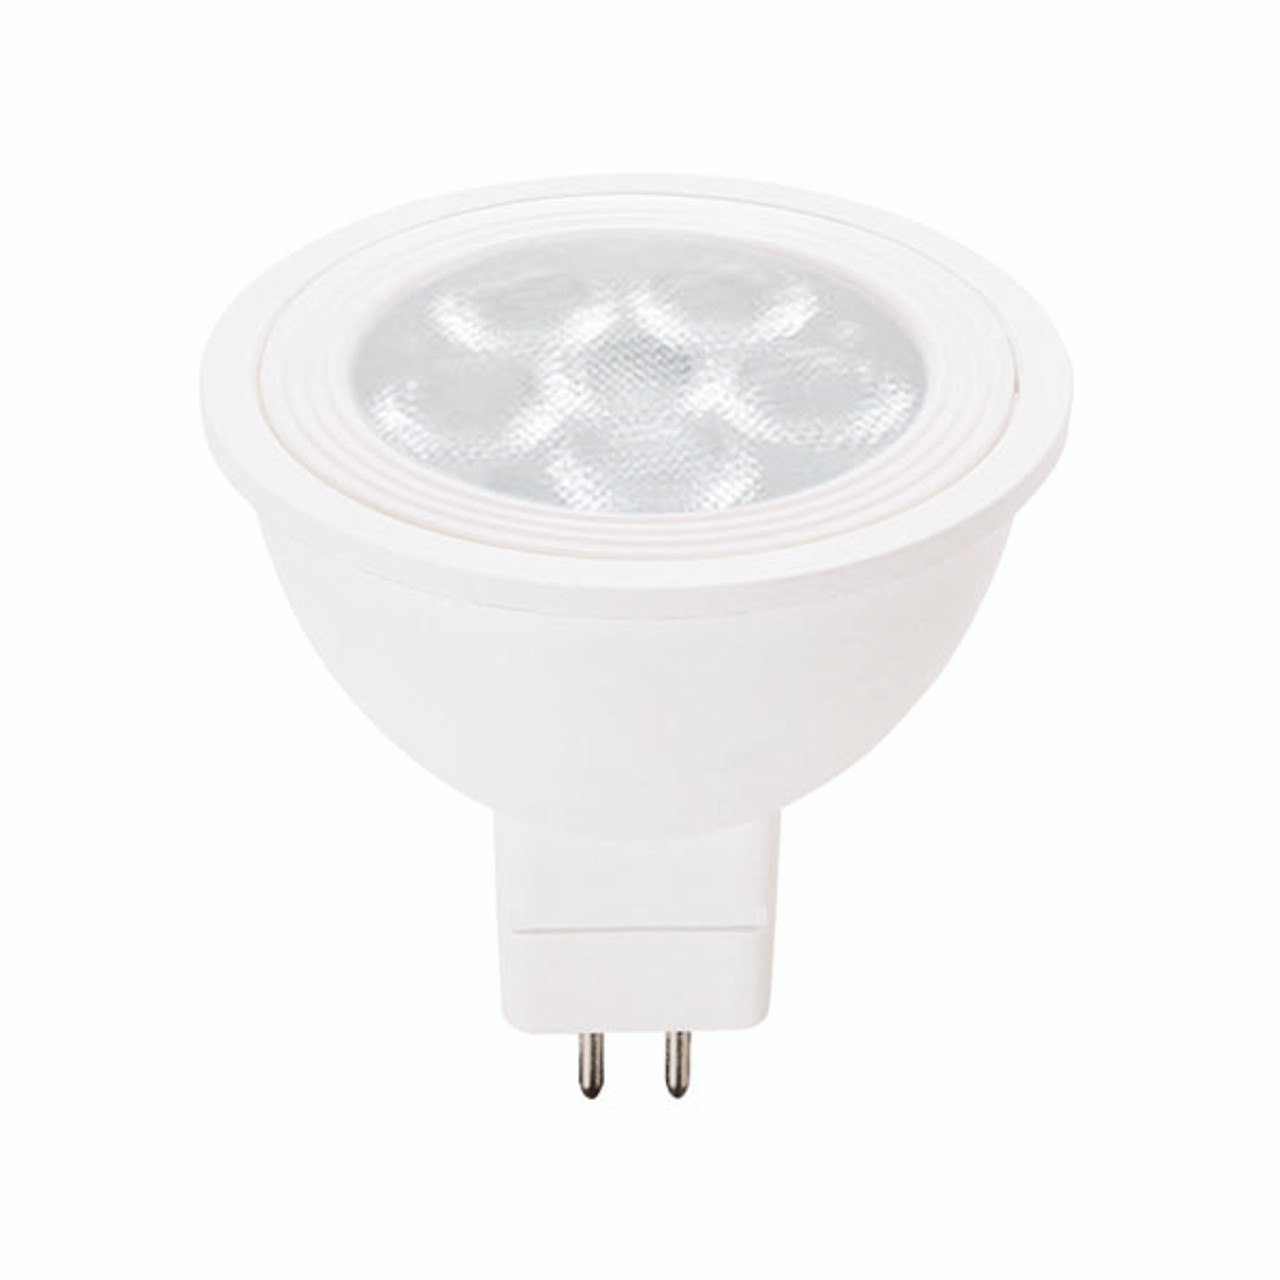 5 Watt LED Lamp, G5.3 Base